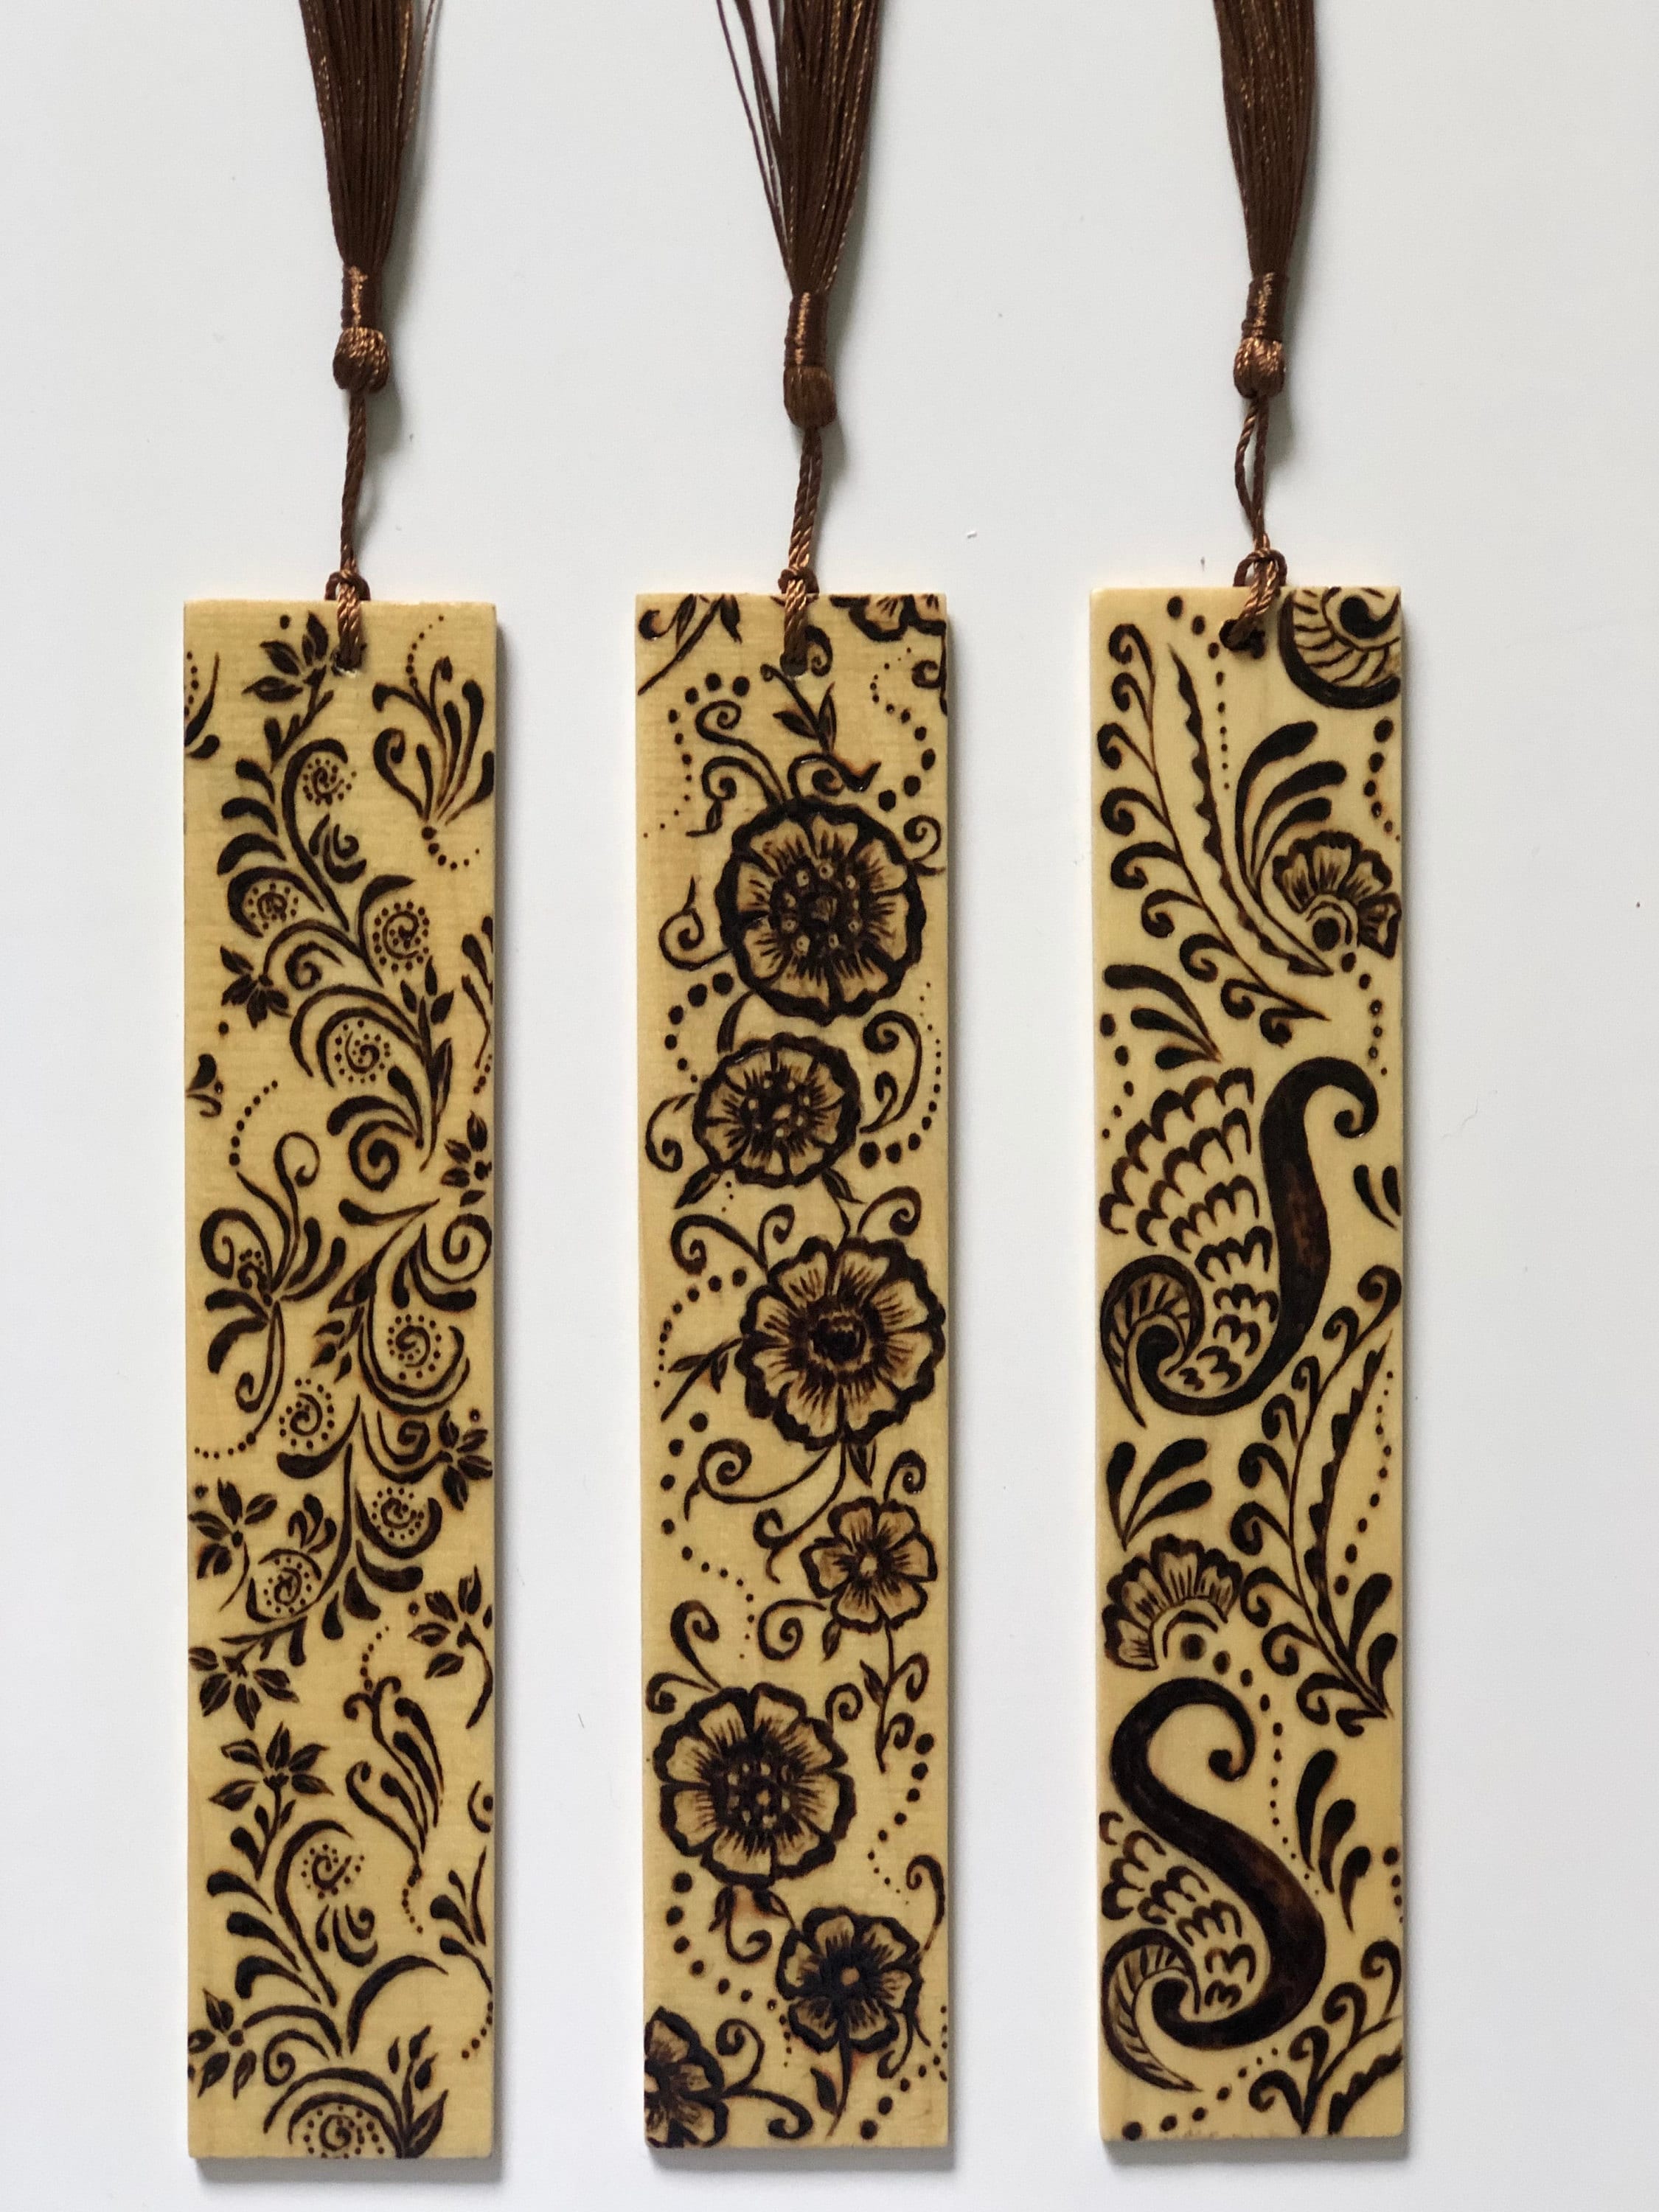 Henna Inspired Bookmark Kit